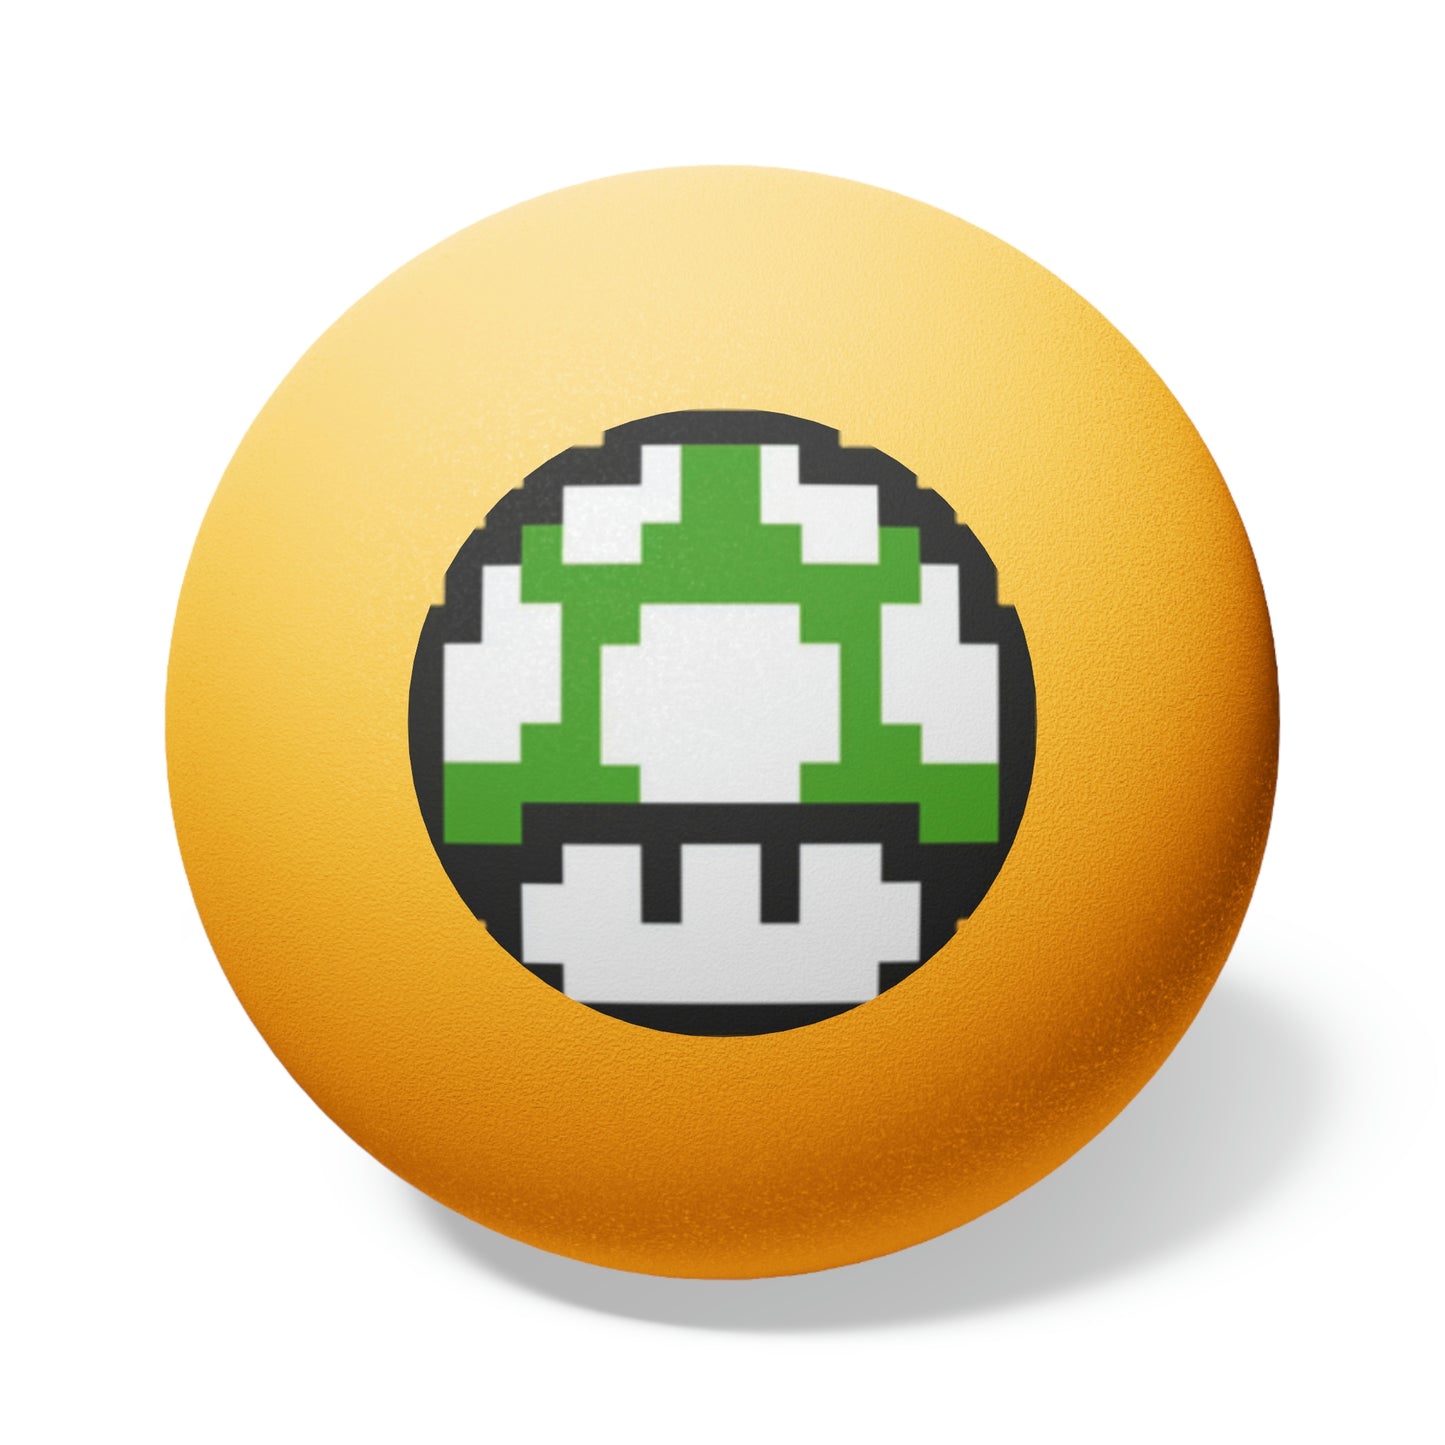 Green Mushroom 8 Bit Style Ping Pong Balls, 6 pcs